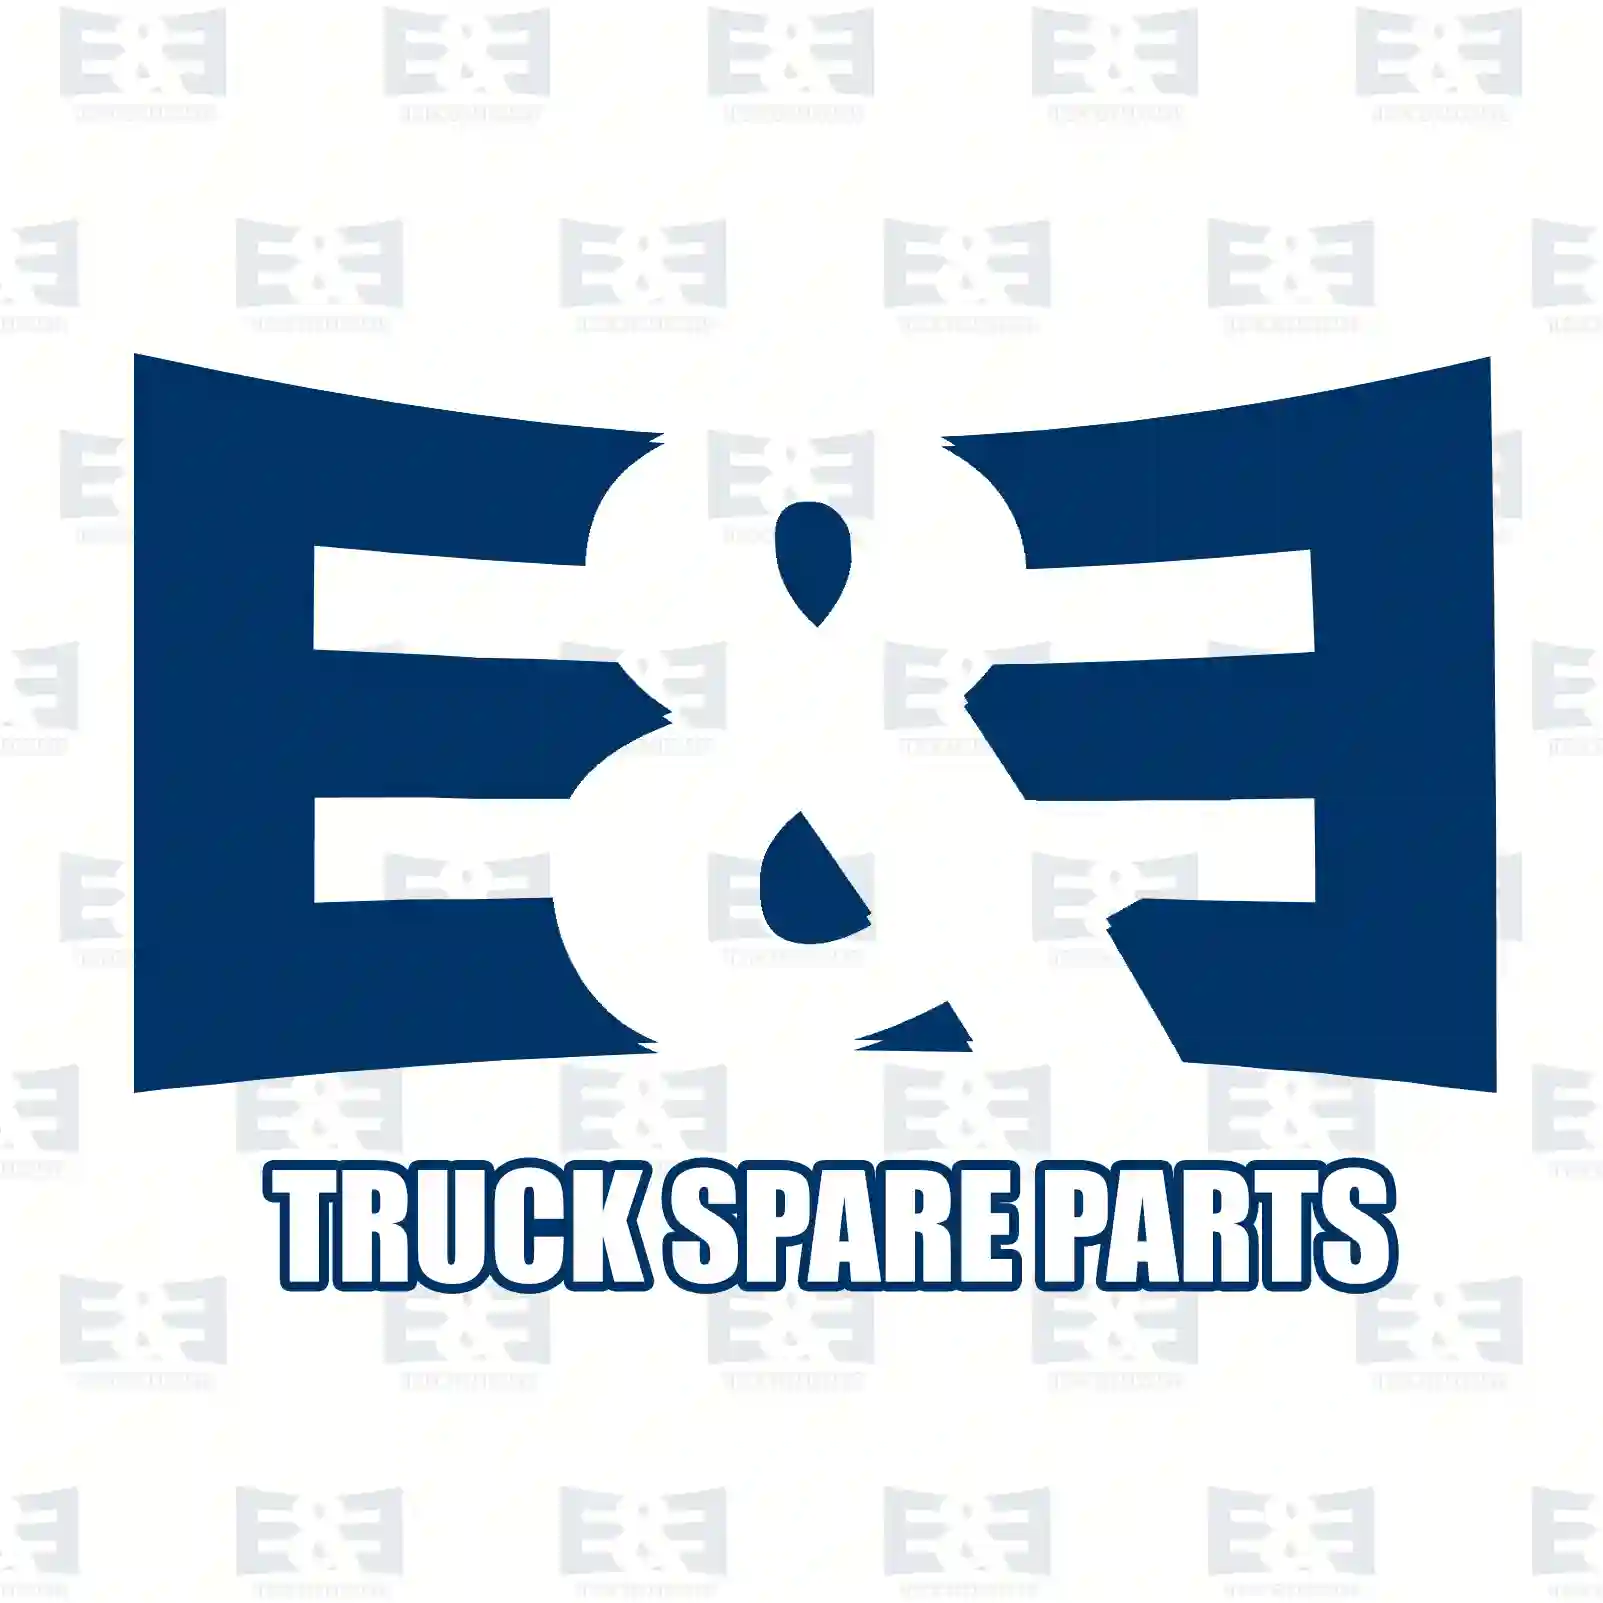 Input shaft, 2E2276070, 1778014, 2028672 ||  2E2276070 E&E Truck Spare Parts | Truck Spare Parts, Auotomotive Spare Parts Input shaft, 2E2276070, 1778014, 2028672 ||  2E2276070 E&E Truck Spare Parts | Truck Spare Parts, Auotomotive Spare Parts